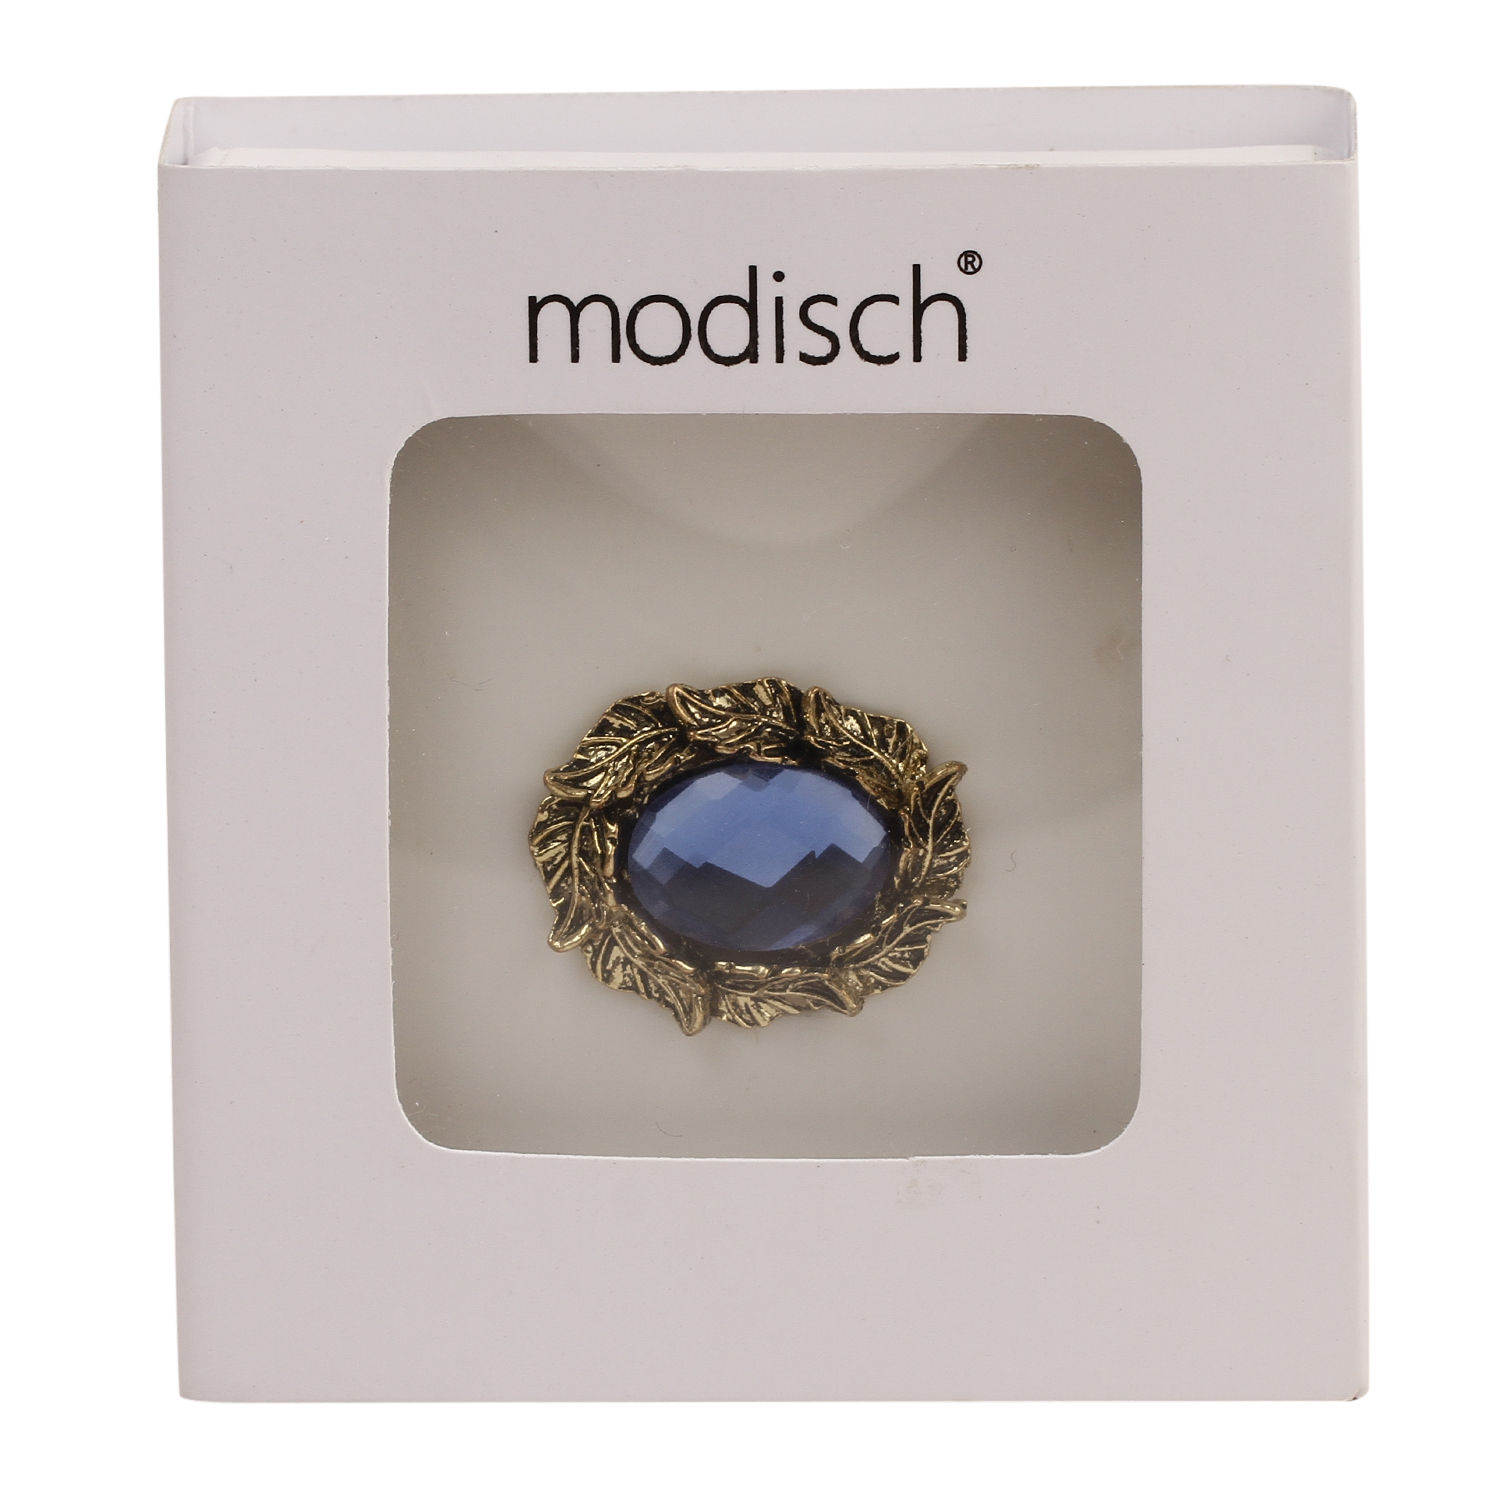 Modisch New Fashion Blue Jewel Contact Lens Case